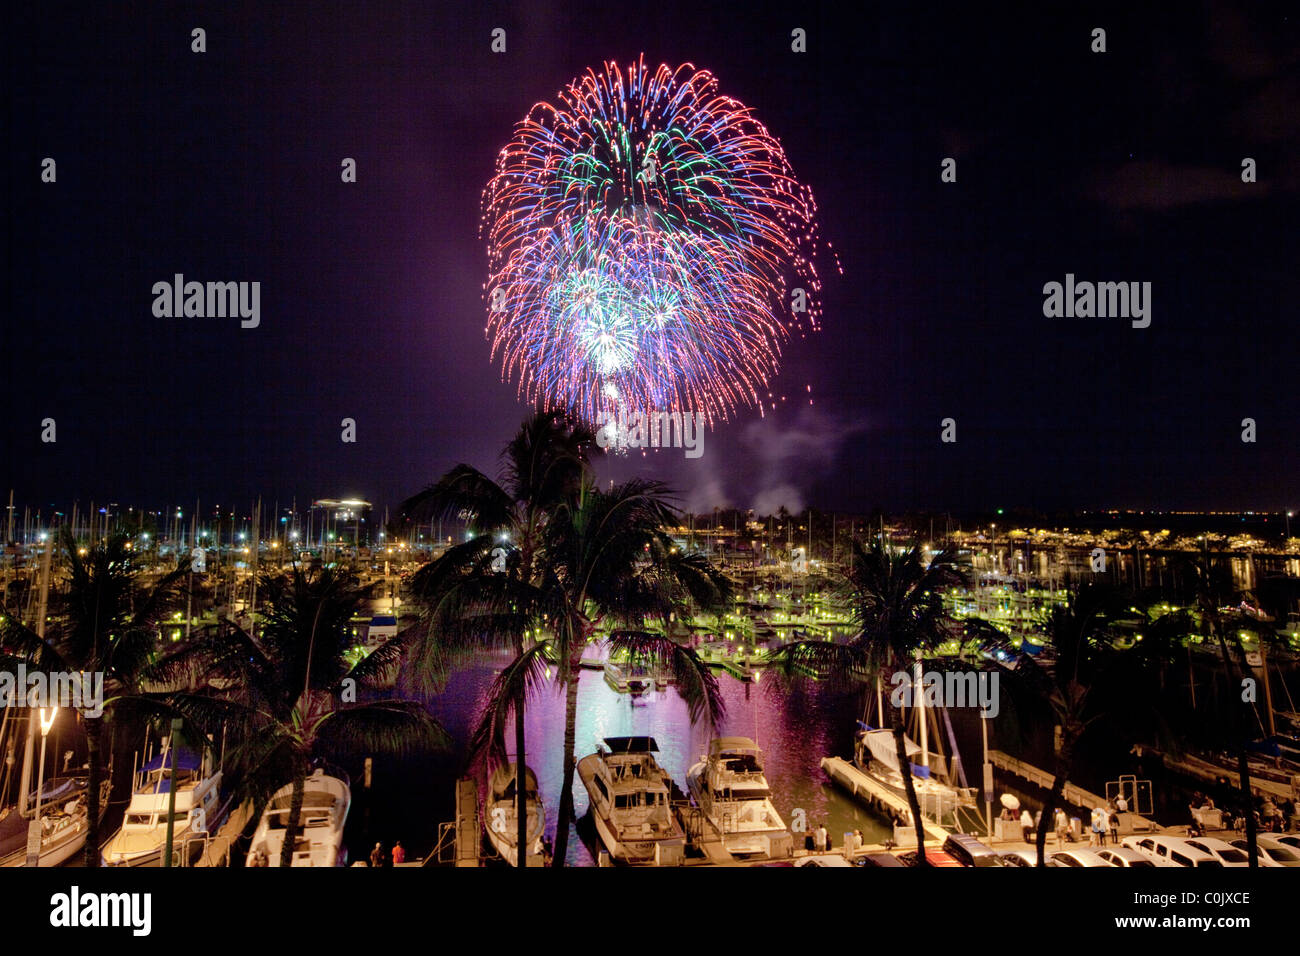 Fourth of July fireworks display, Ala Wai Yacht Harbor, Waikiki